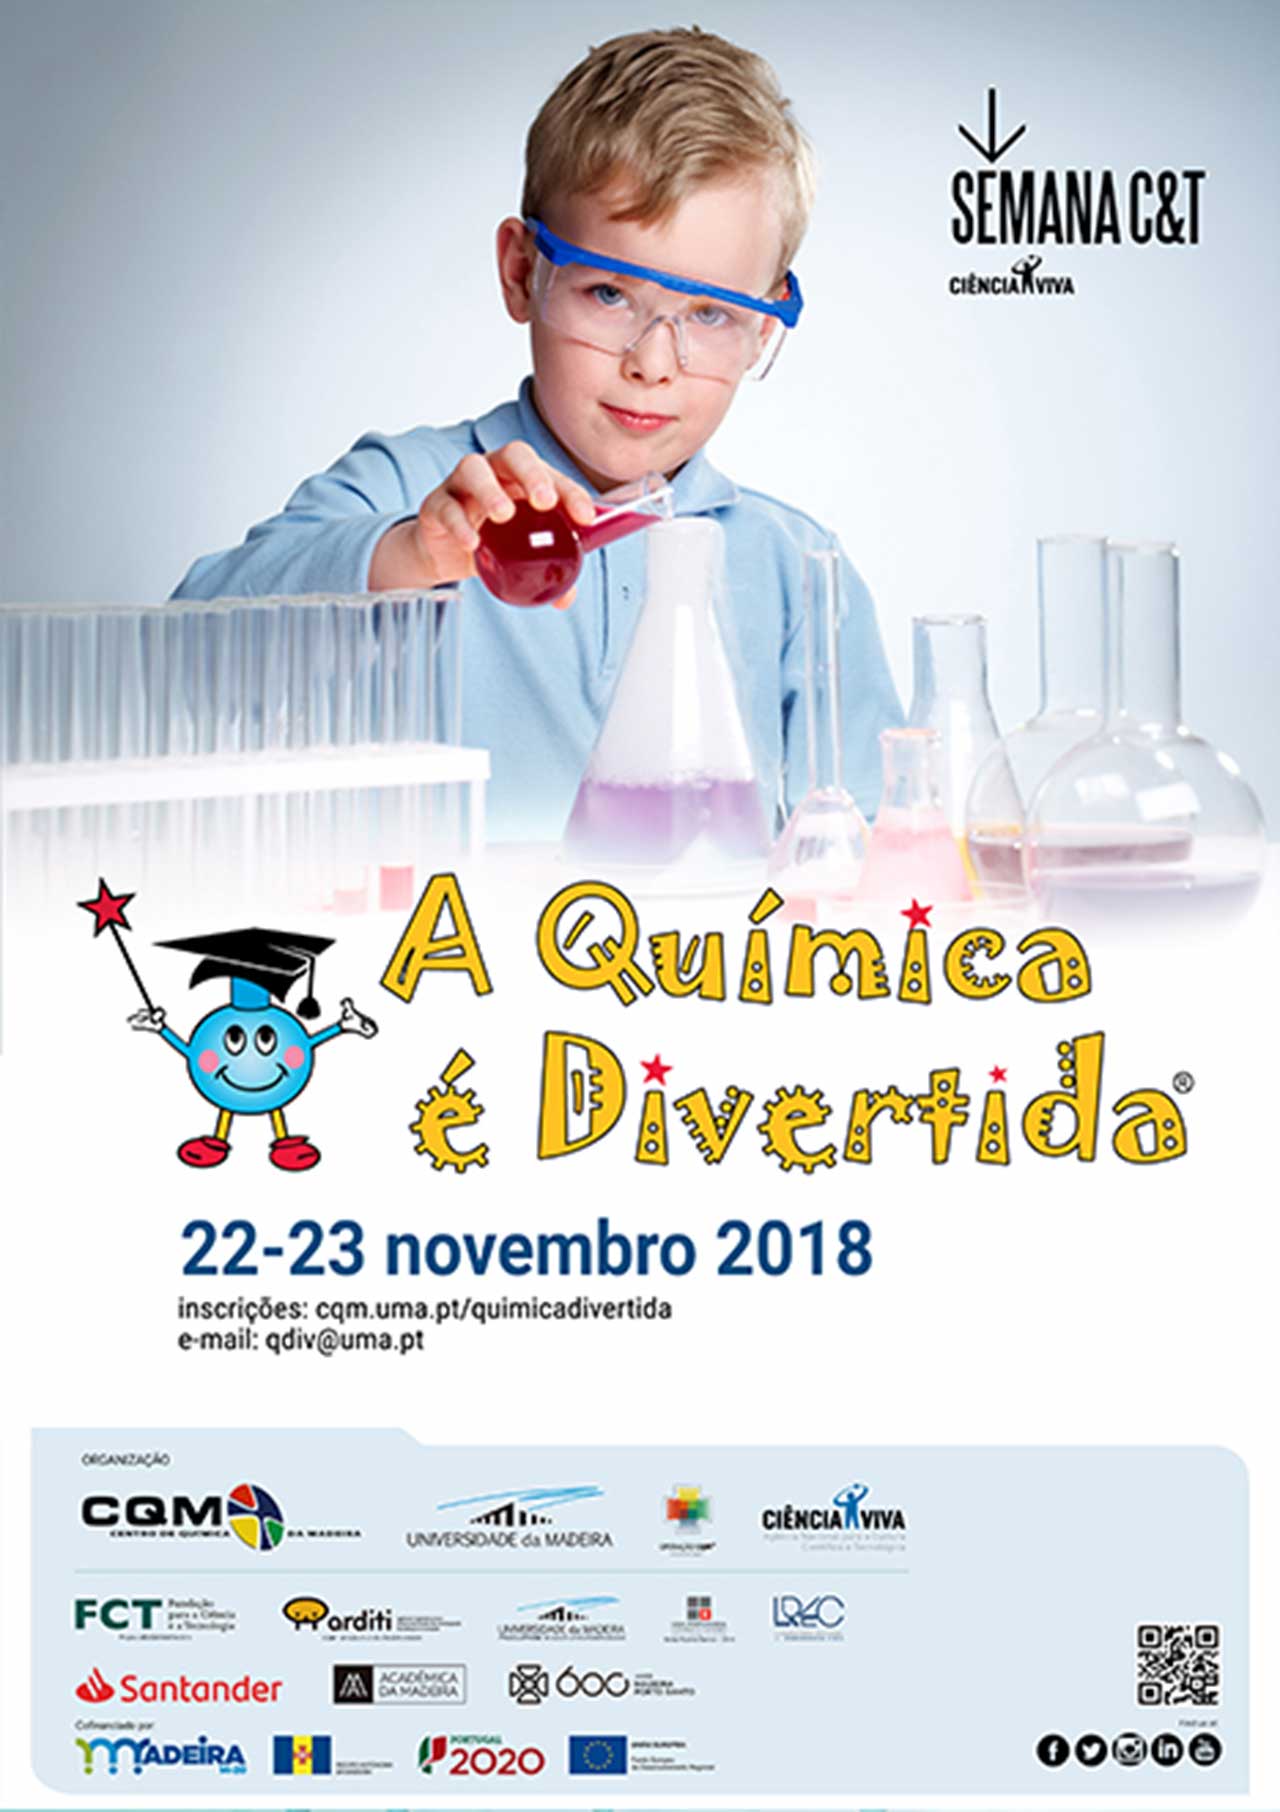 A Química é Divertida 2018 event poster.